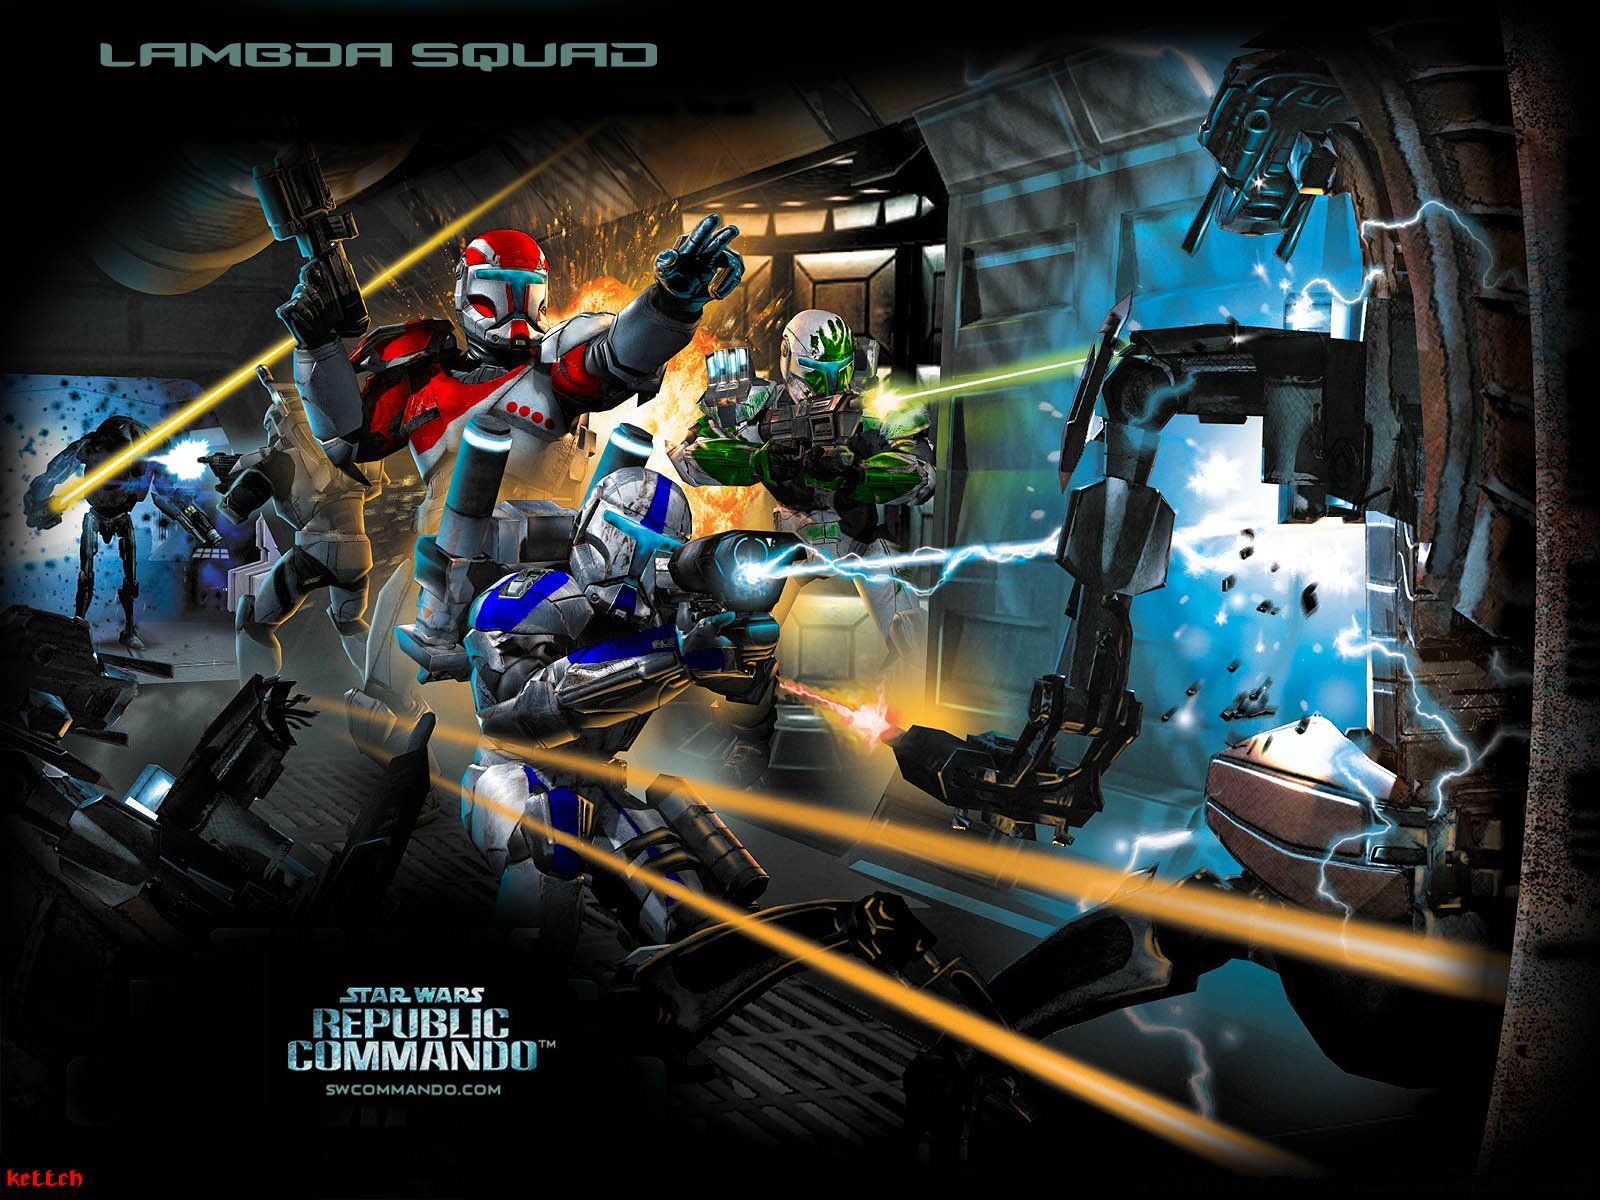 Star Wars Republic Commando Video Game Wallpaper Hd  Wallpapers13com